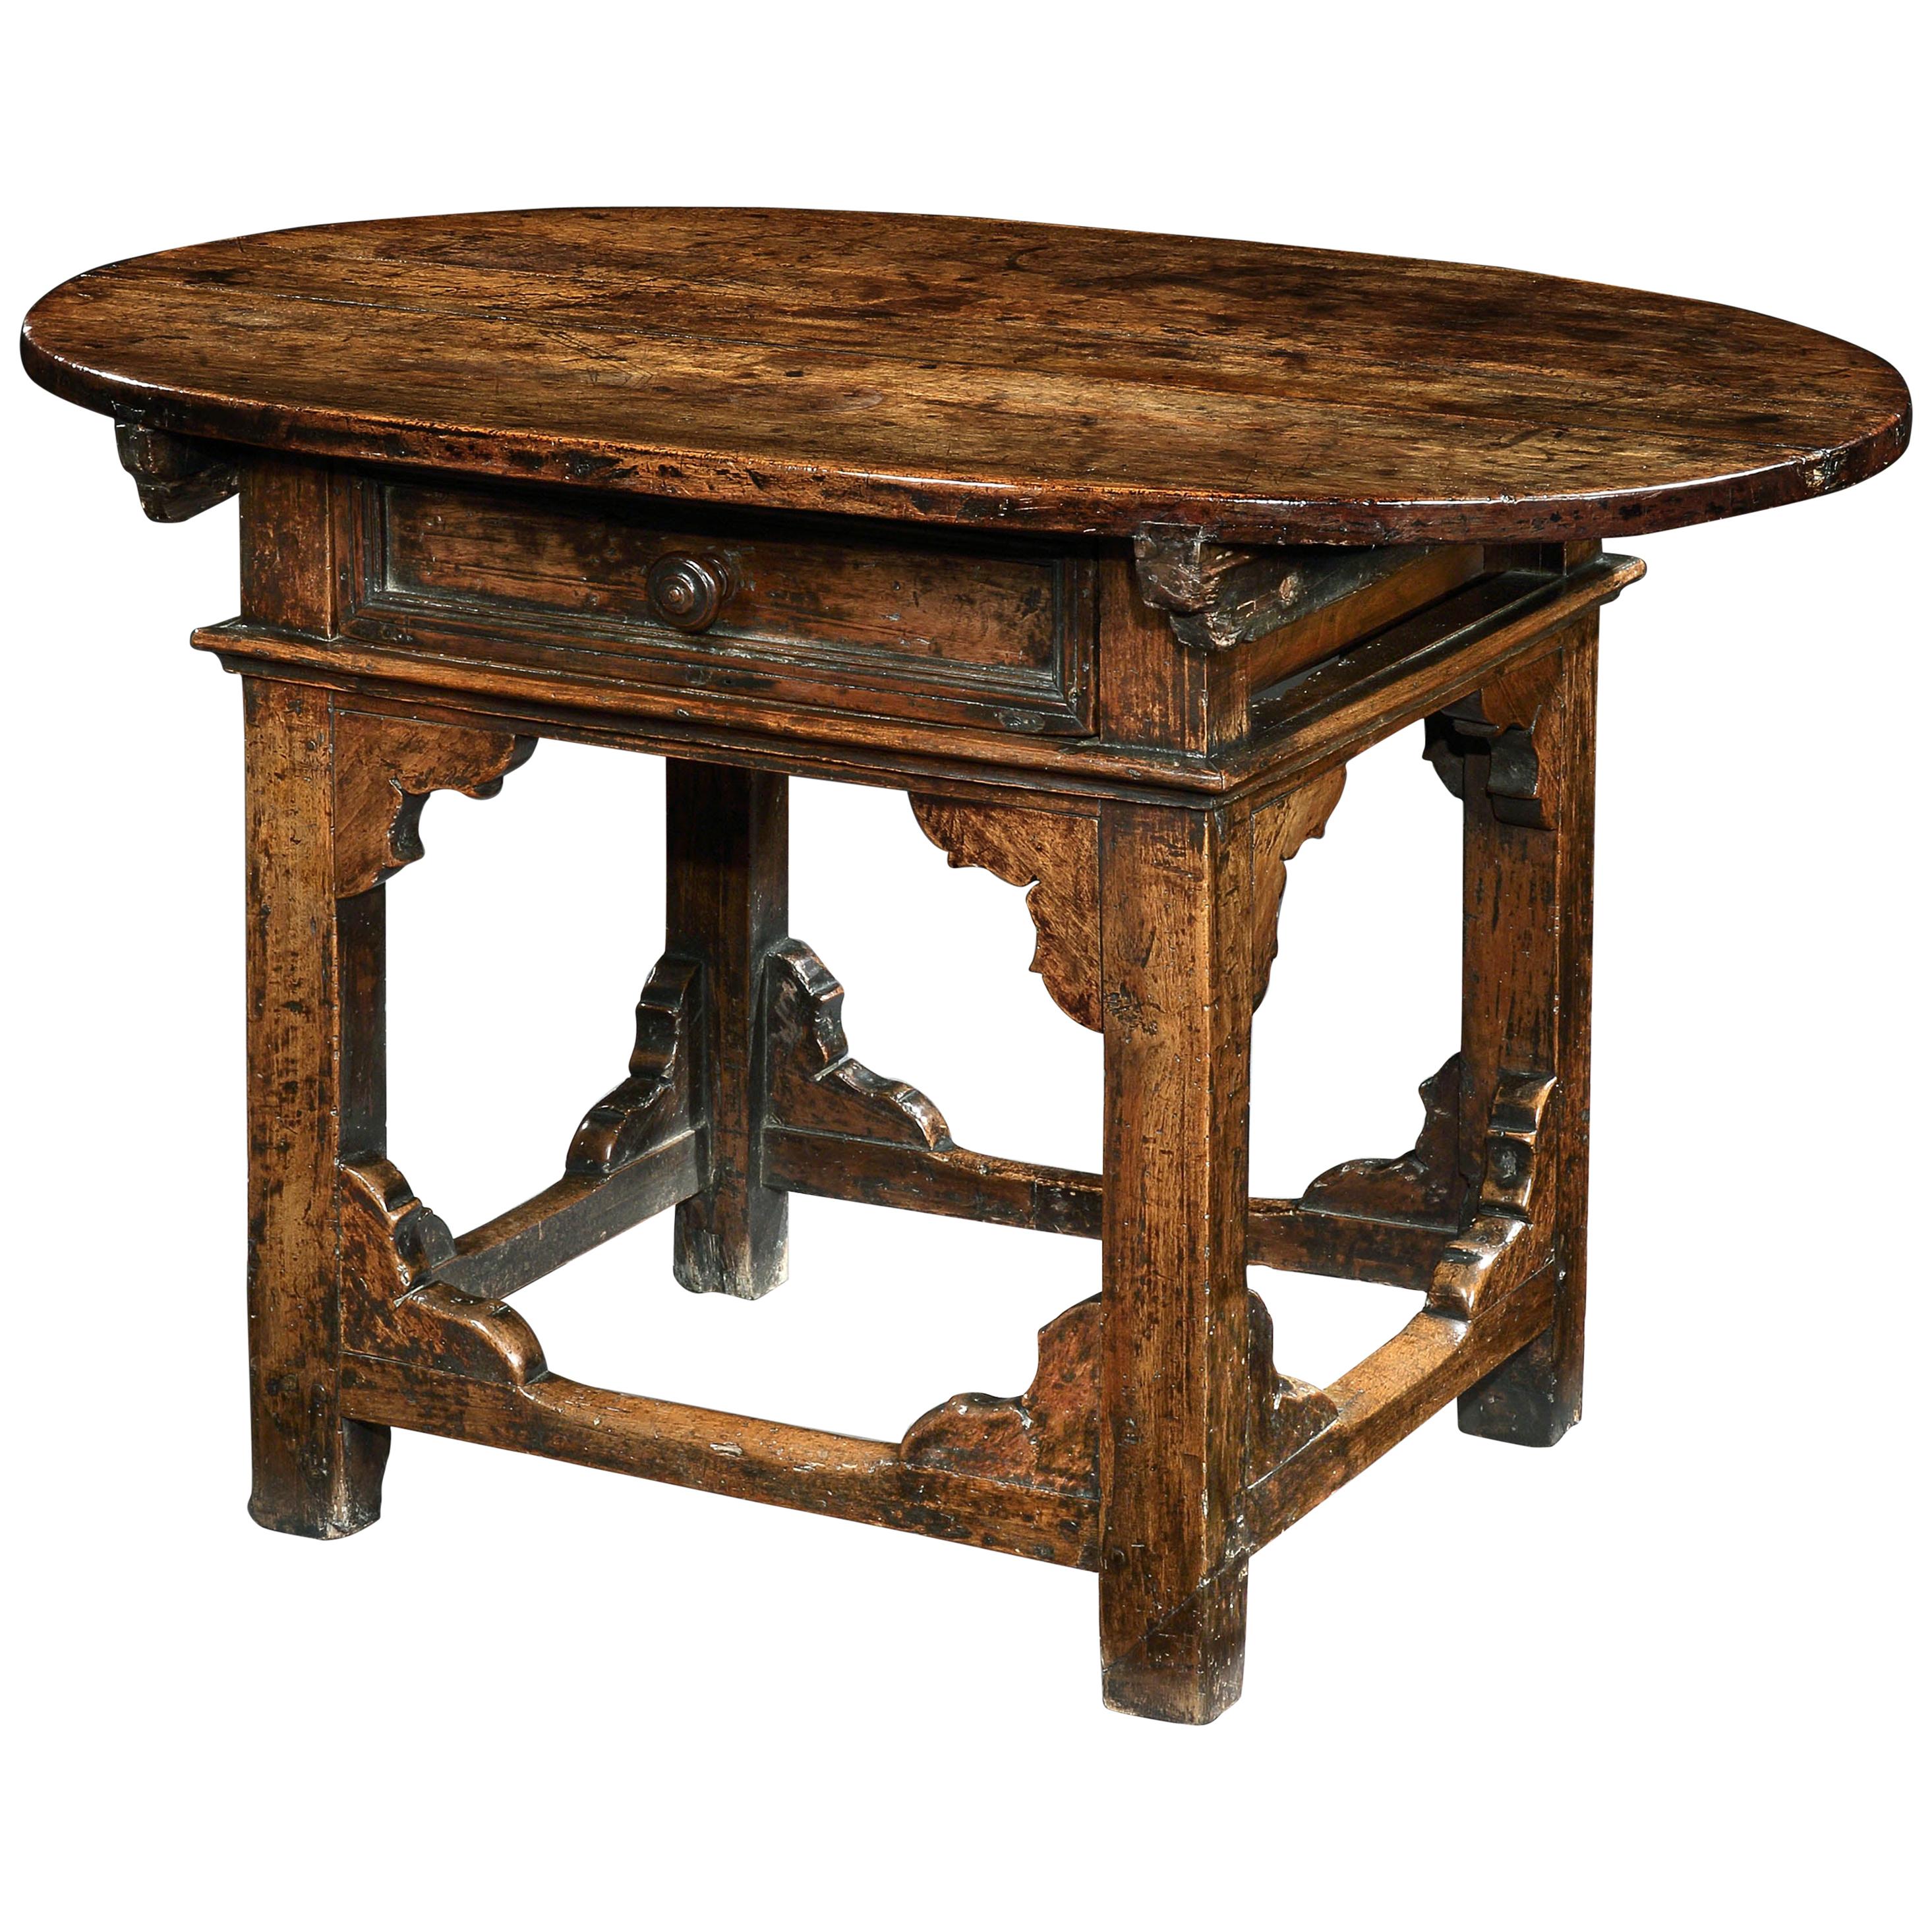 Table centrale de bureau ou de rangement Tavolino en noyer toscan baroque italien